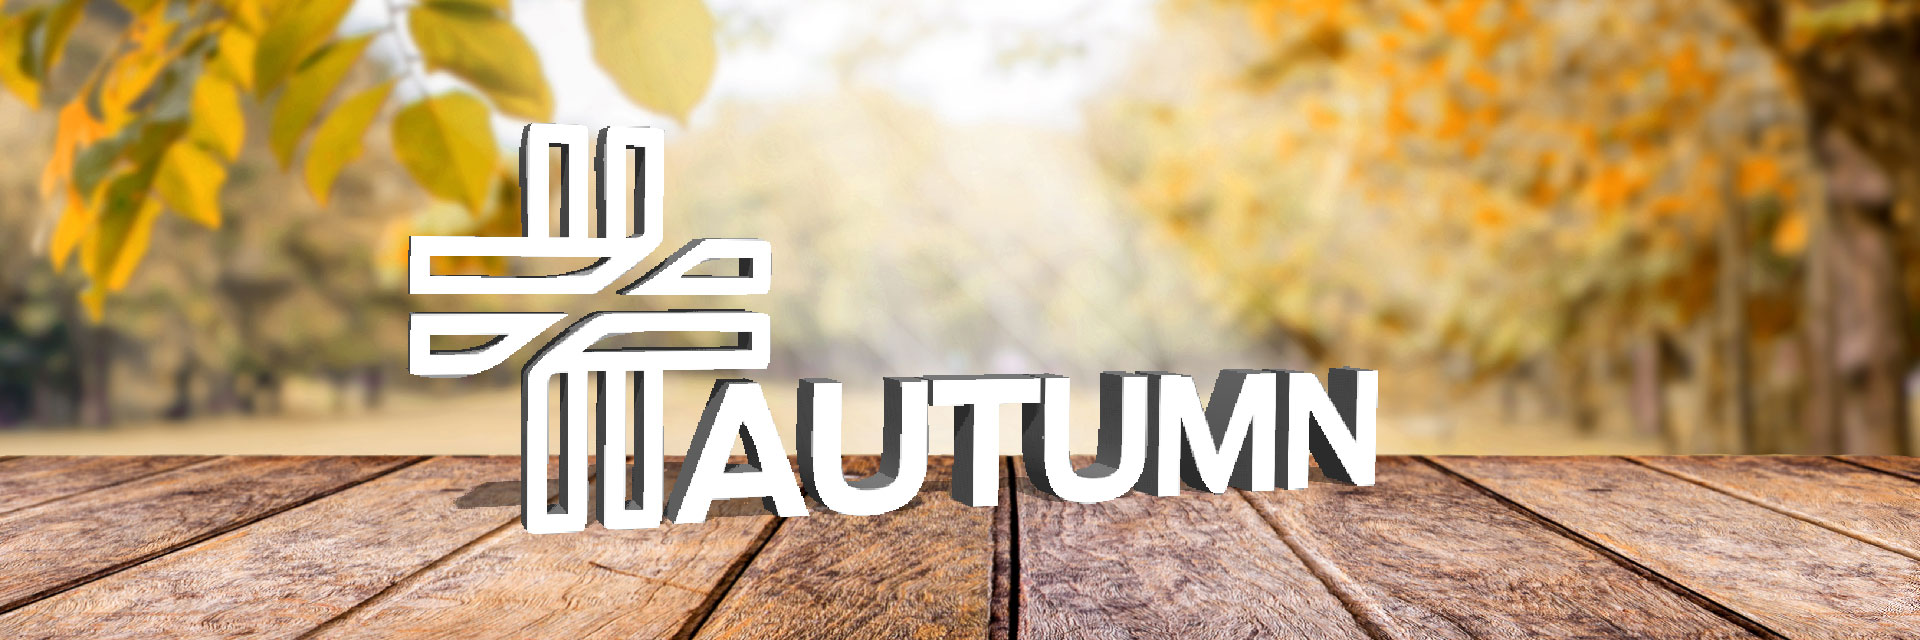 autumn-header.jpg